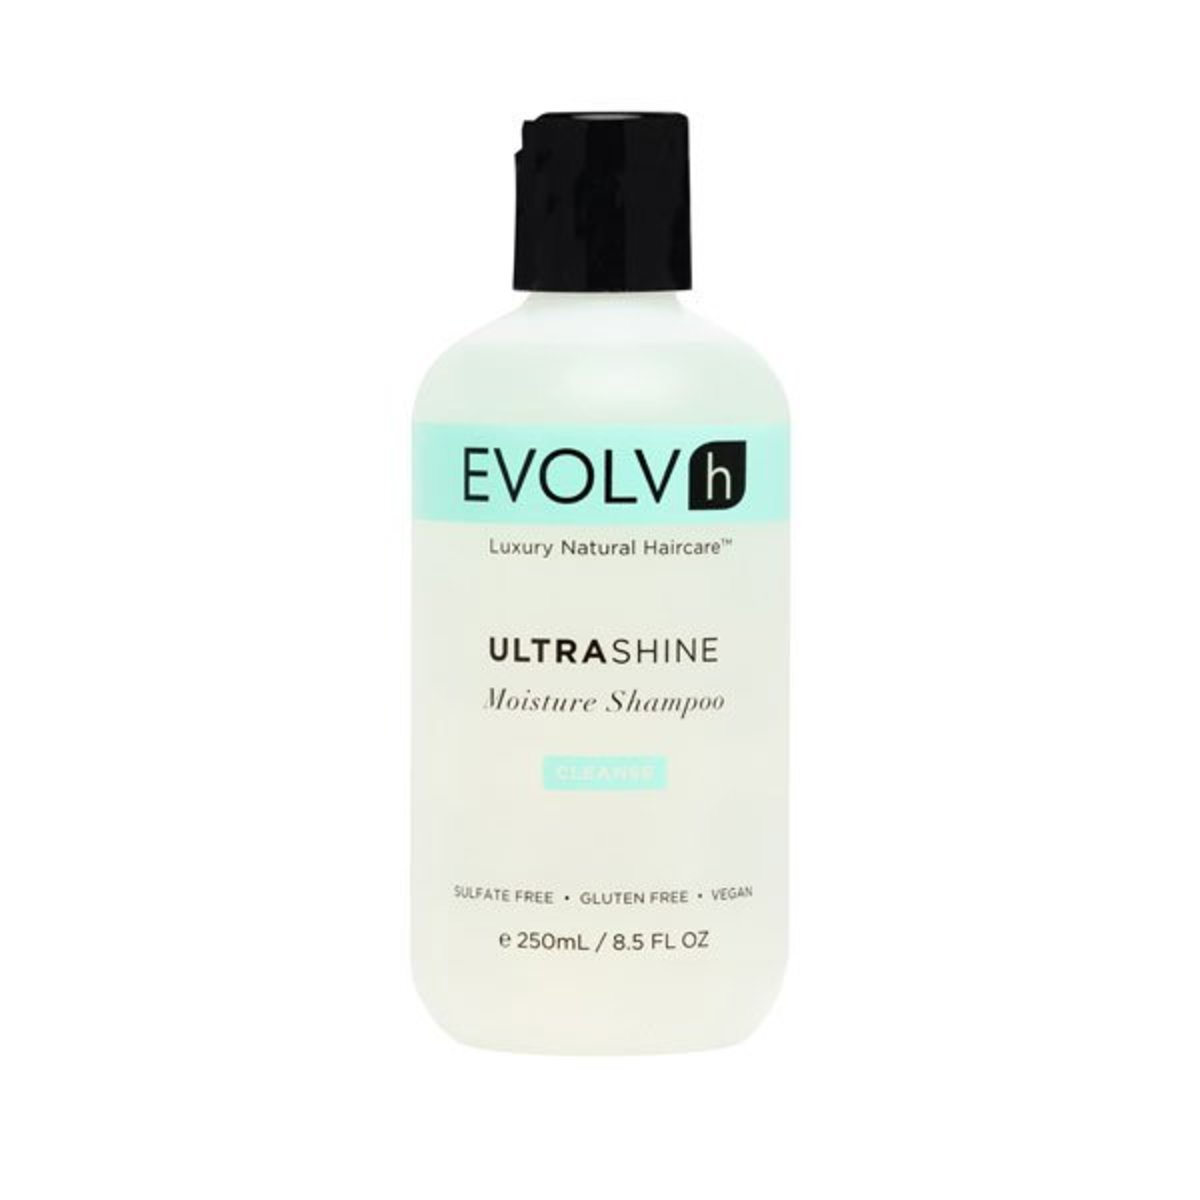 evolvh_ultrashine_moisture_shampoo